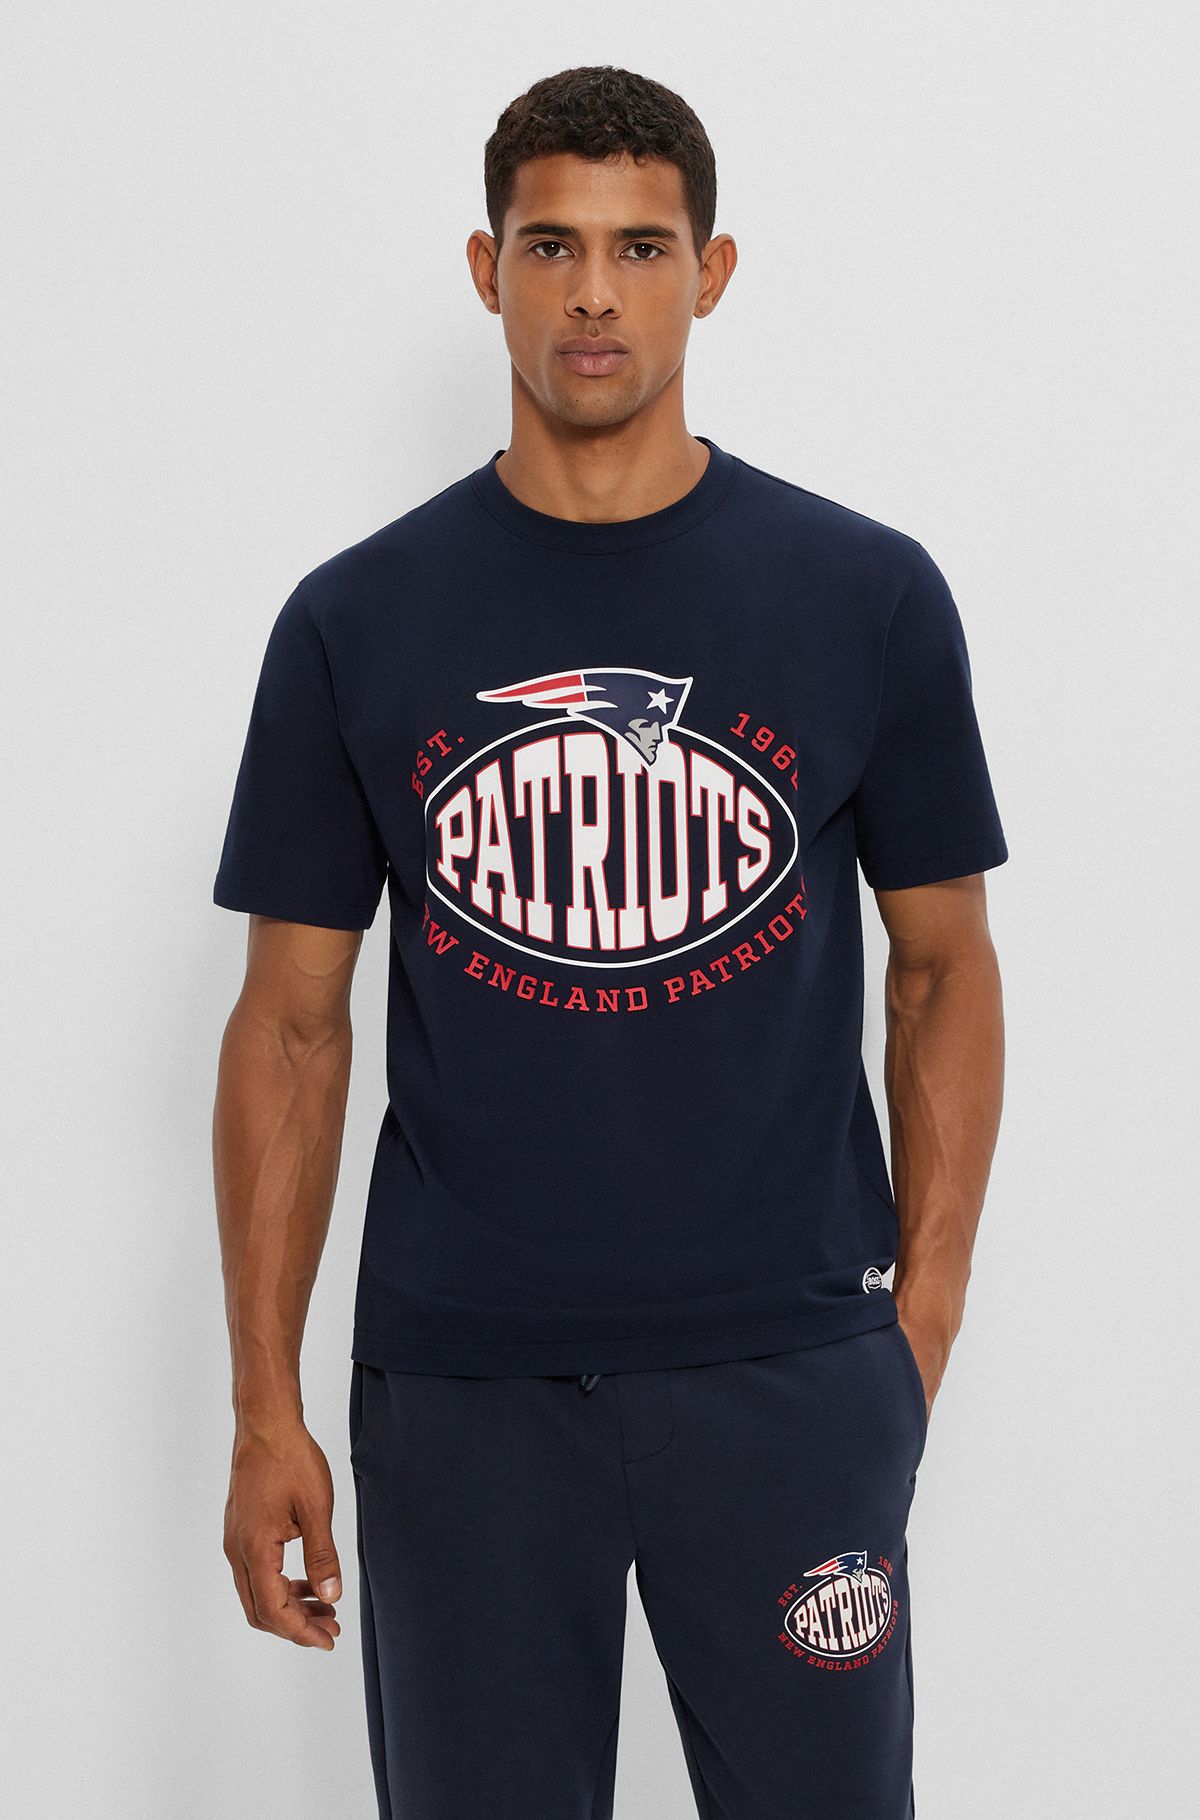  T-shirt en coton stretch BOSS x NFL avec logo du partenariat, Patriots